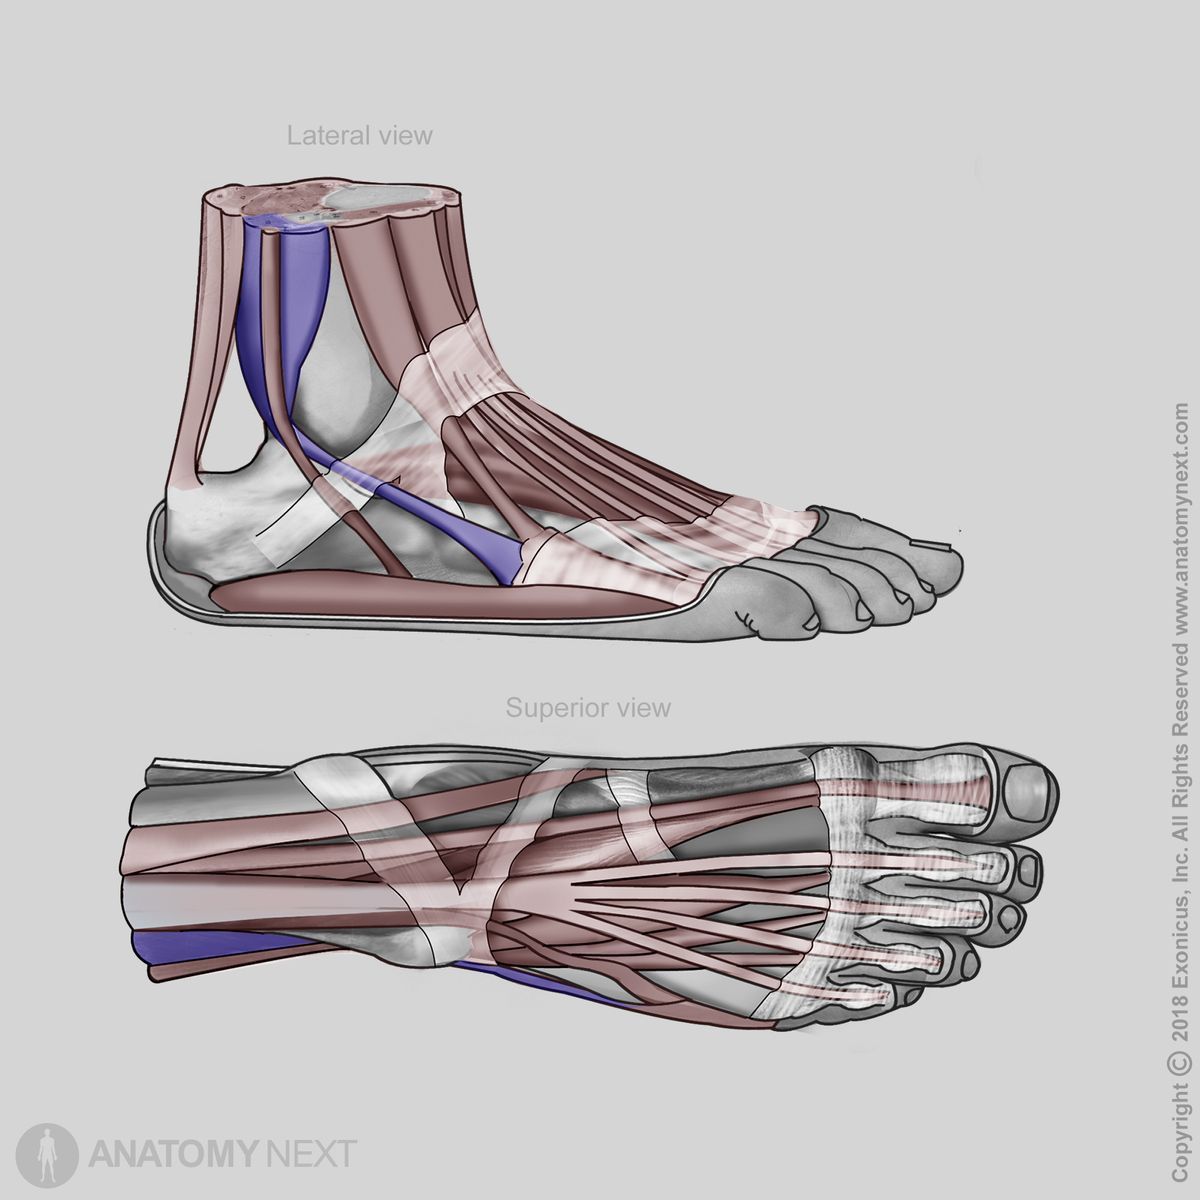 Peroneus brevis, Fibularis brevis, Insertion of peroneus brevis, Insertion of fibularis brevis, Lateral compartment of leg, Lateral compartment muscles, Leg muscles, Human foot